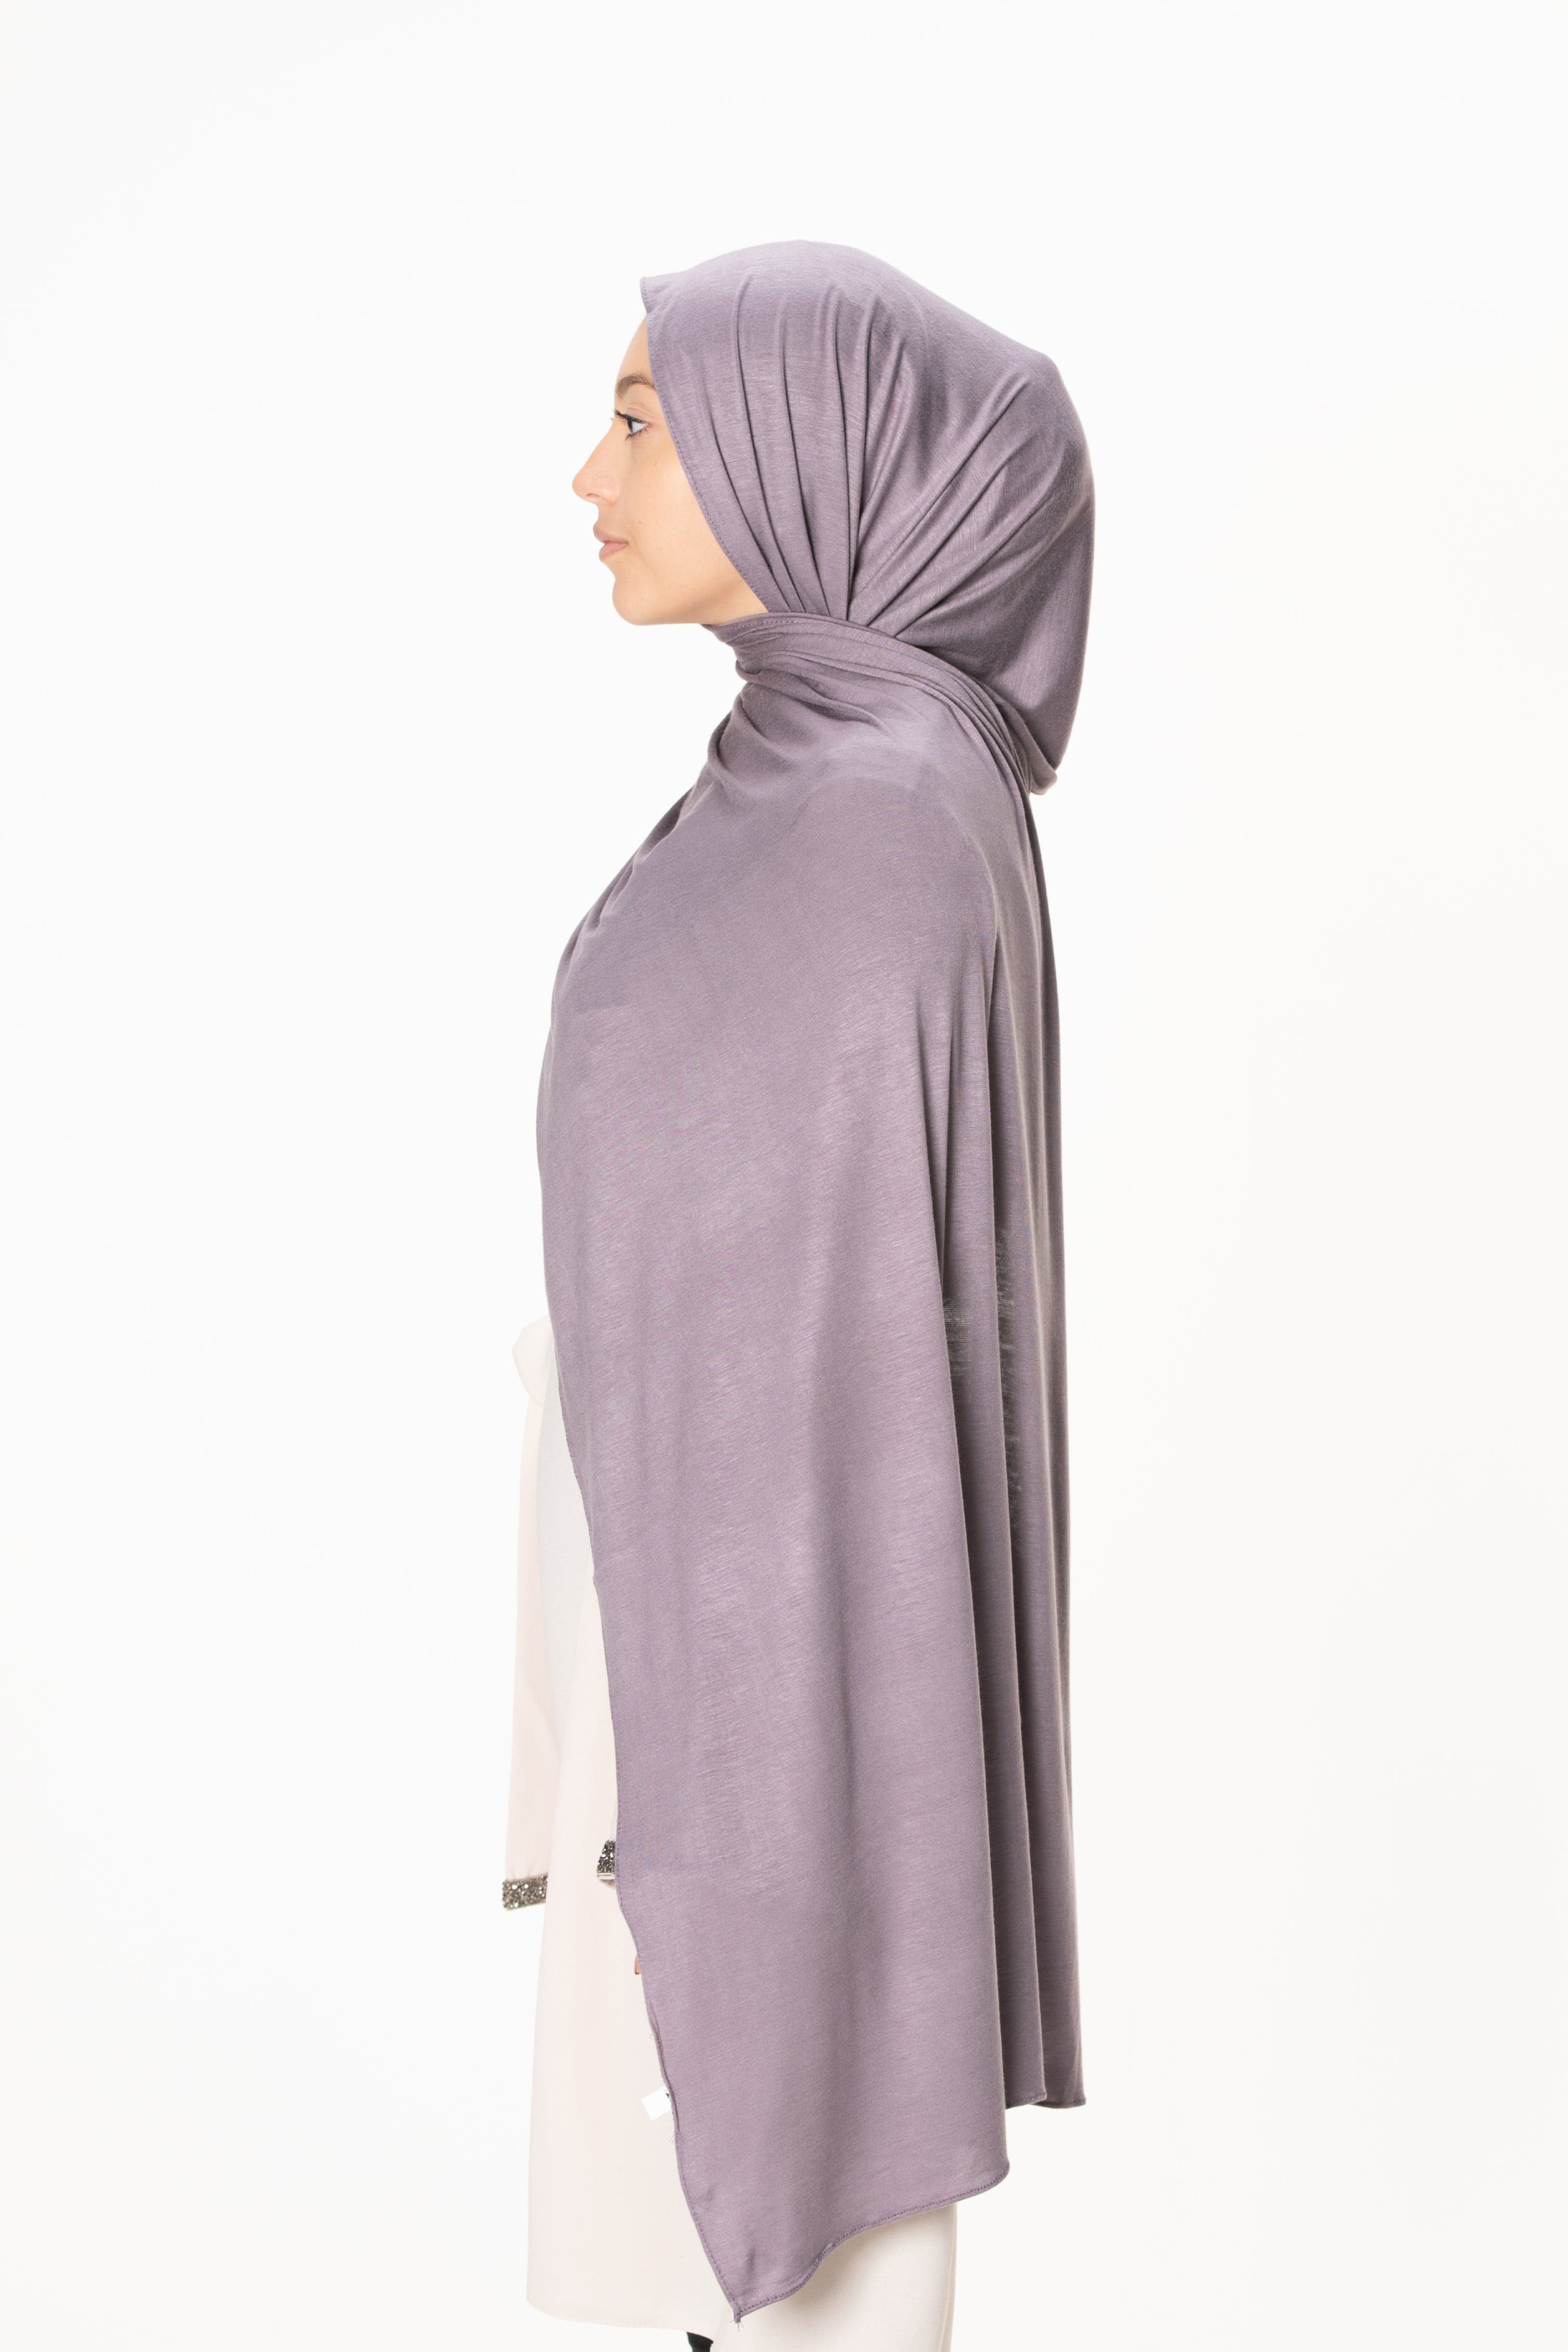 jolienisa Premium Jersey  Cotton Hijab Duchess Lilac